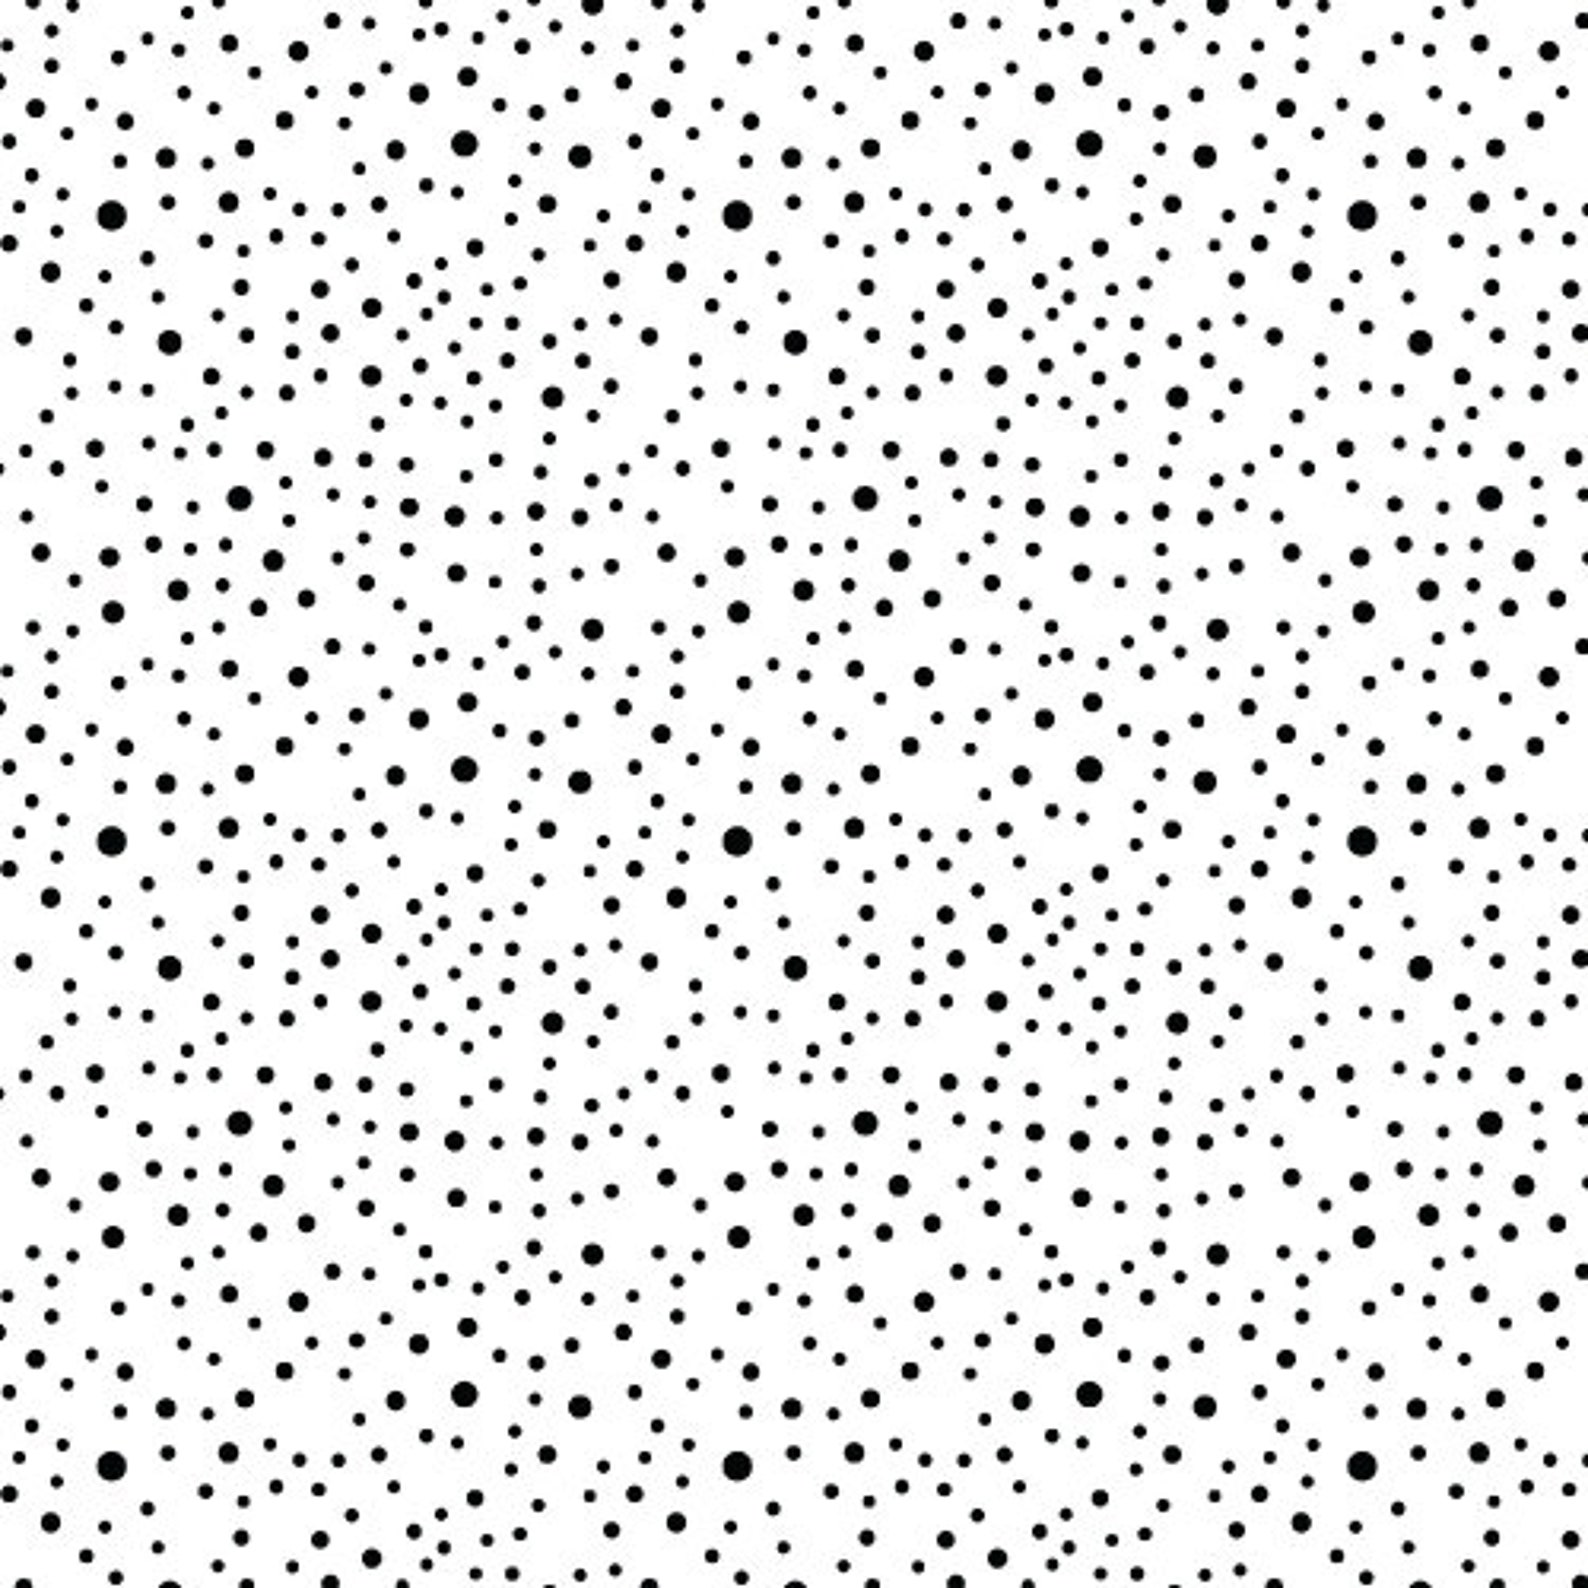 Confetti Polka Dot Black Seamless Pattern Overlay - Etsy